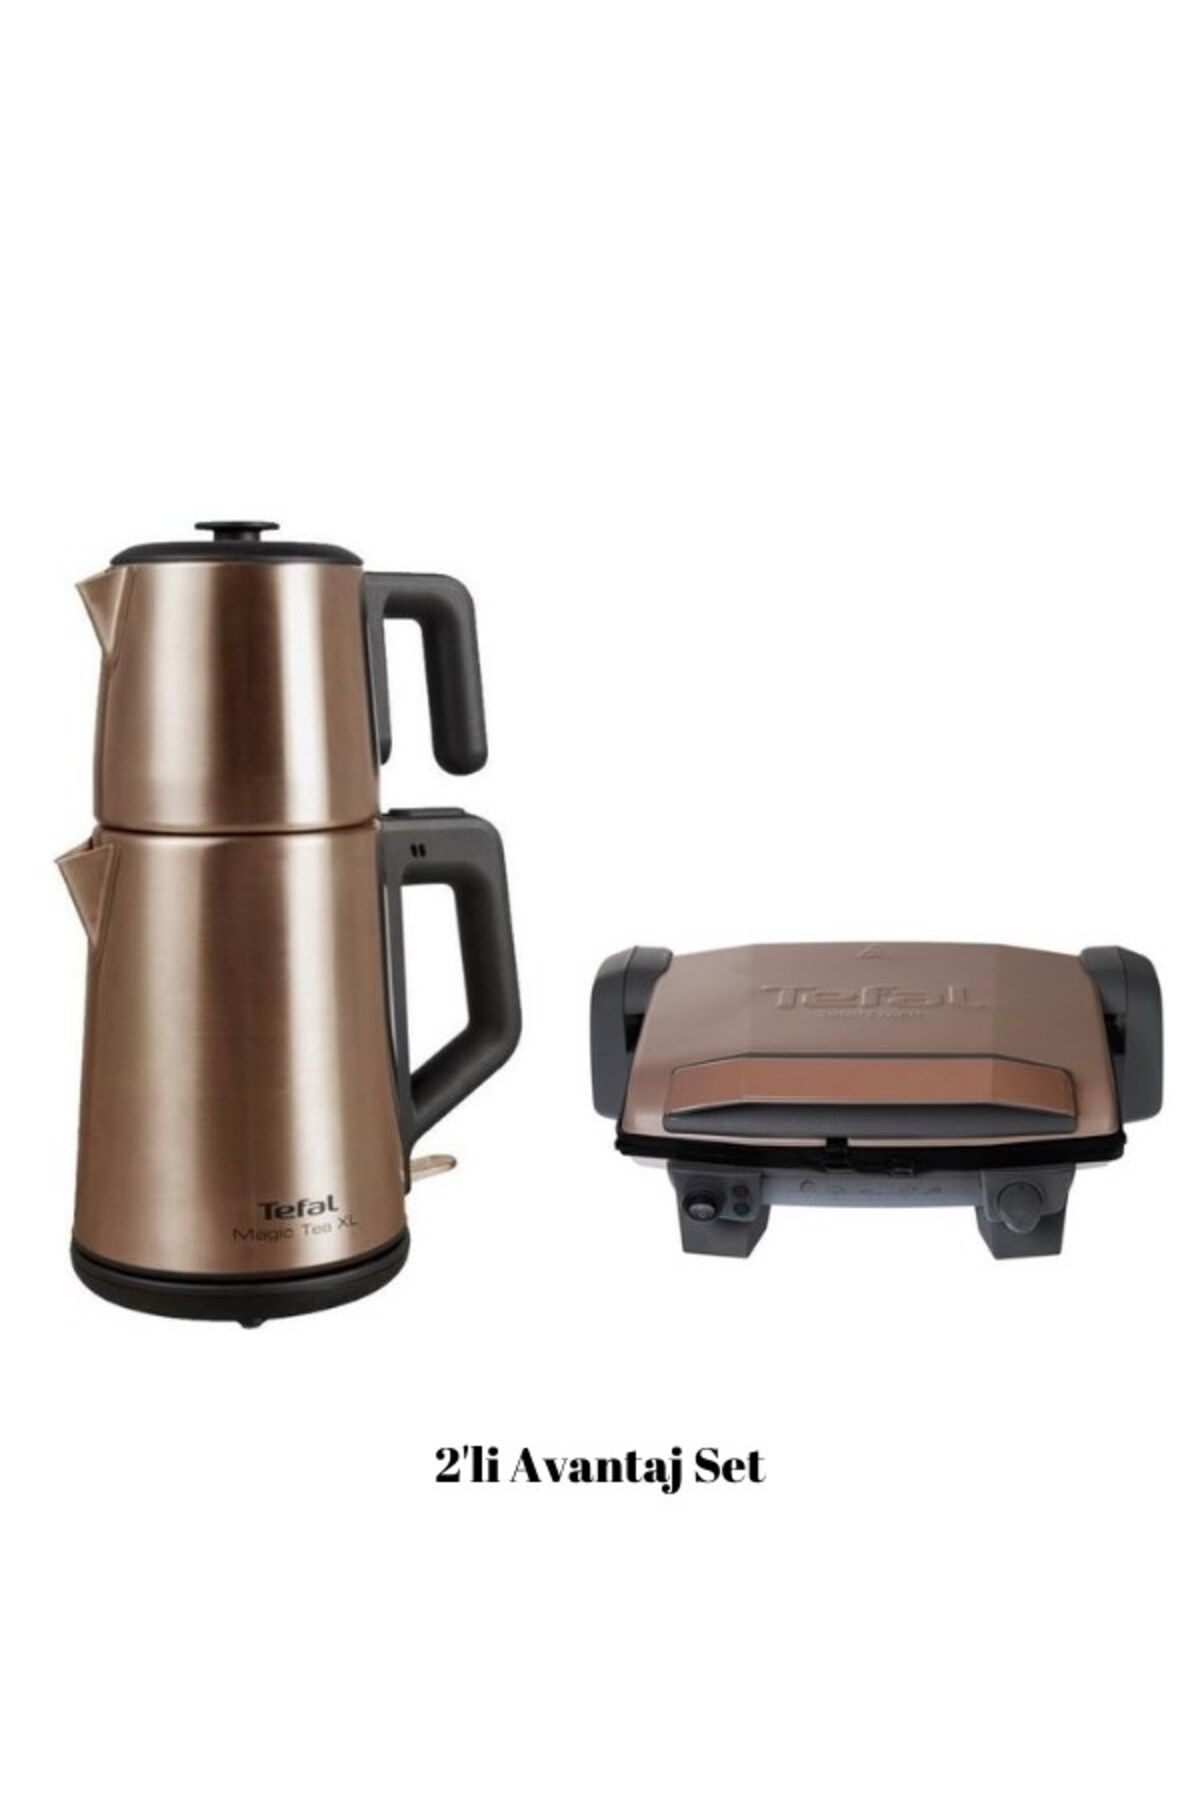 TEFAL Magic Tea XL Çay Makinesi + Tefal Toast Expert Izgara Tost Makinesi Bakır 2'li Avantaj Set